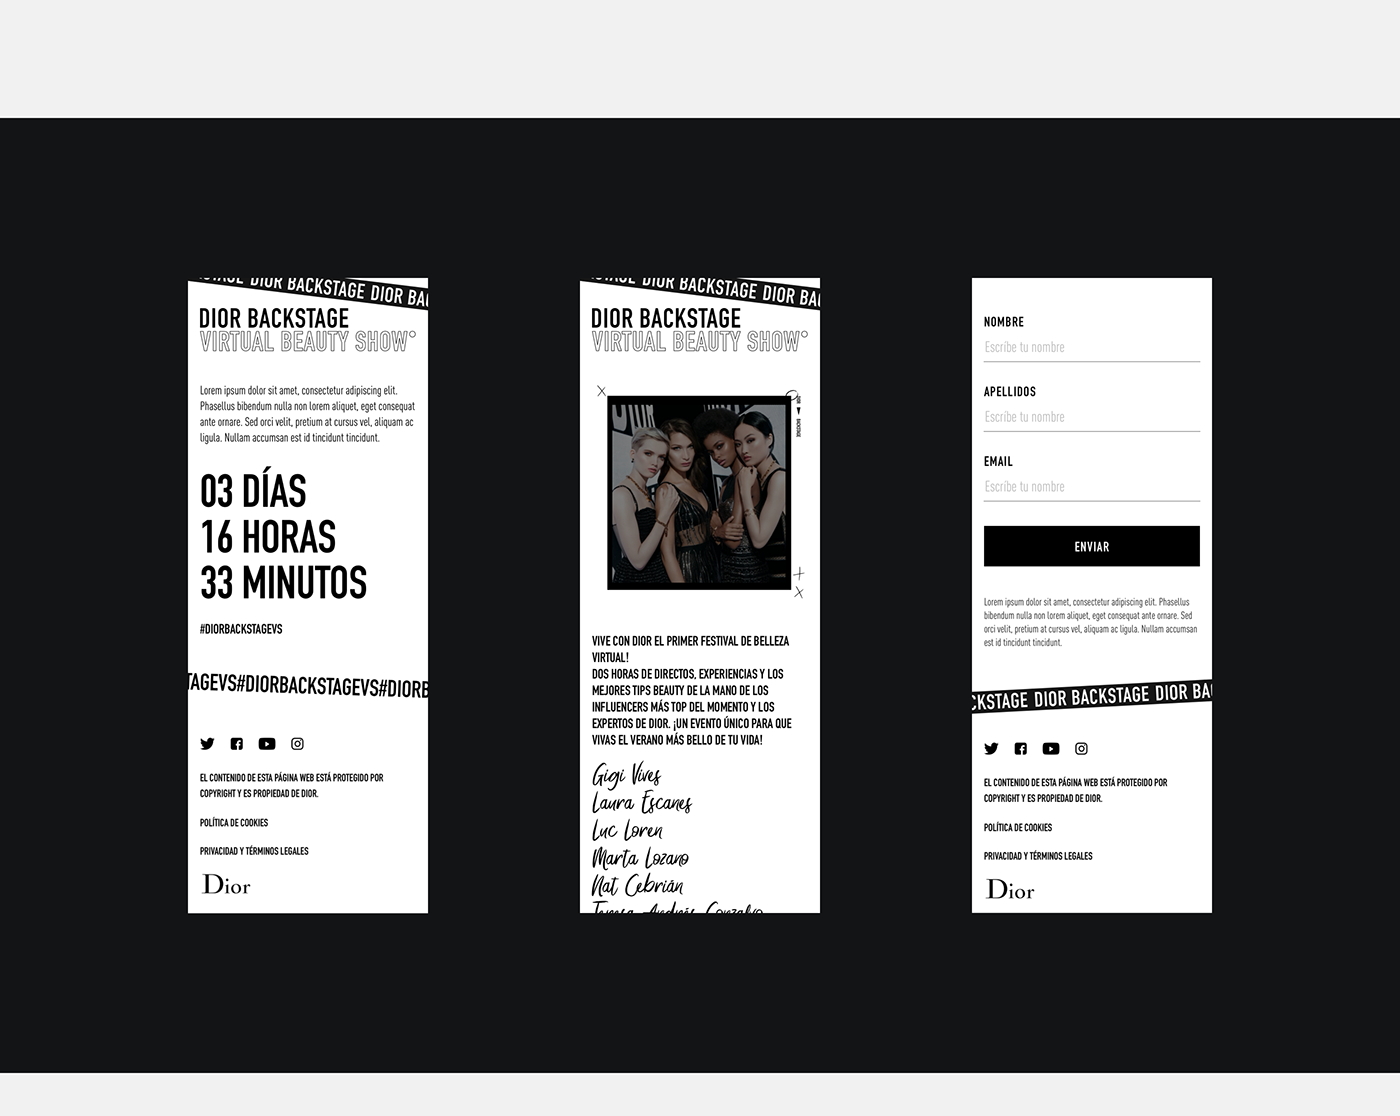 backstage campagin Dior Fashion  microsite Responsive Show Streaming Web